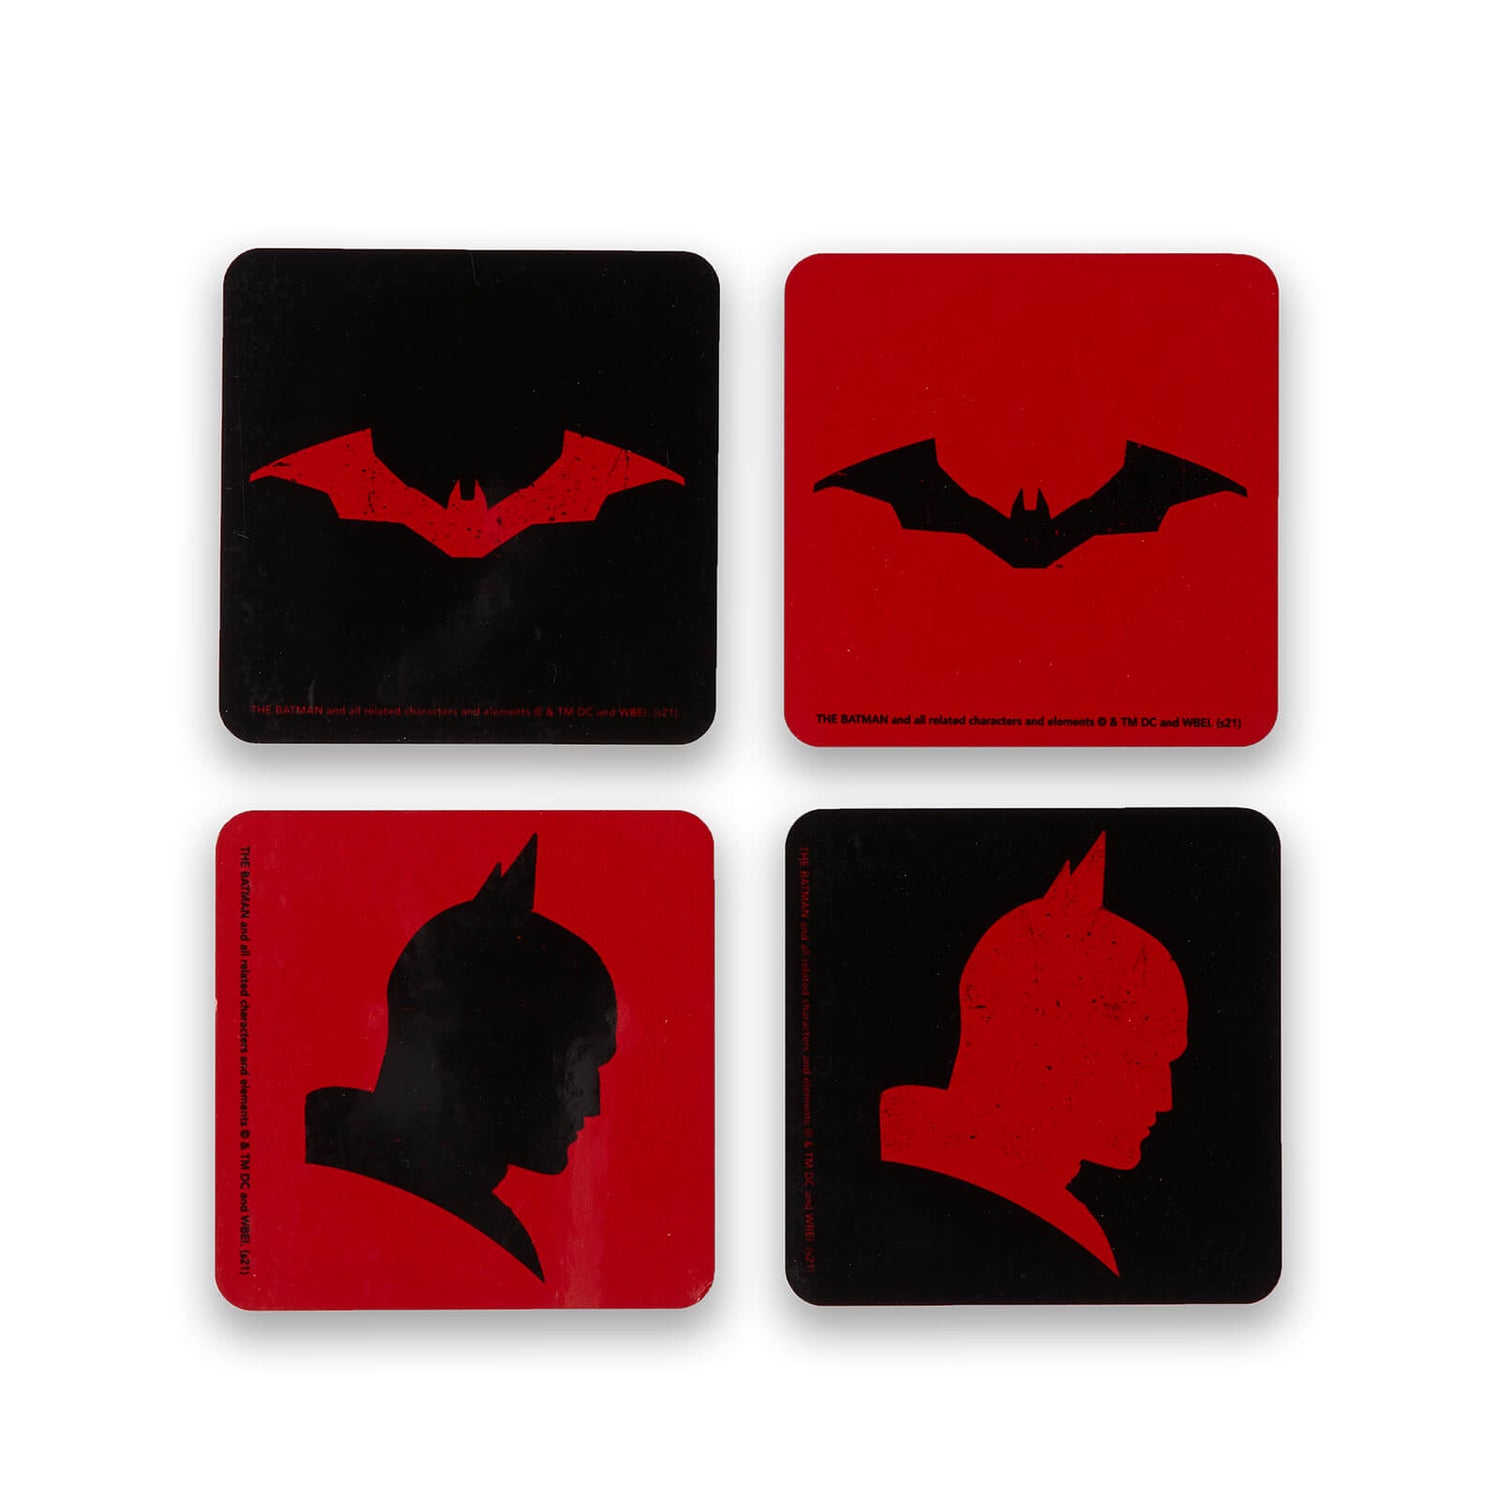 The Batman Silhouette Coaster Set